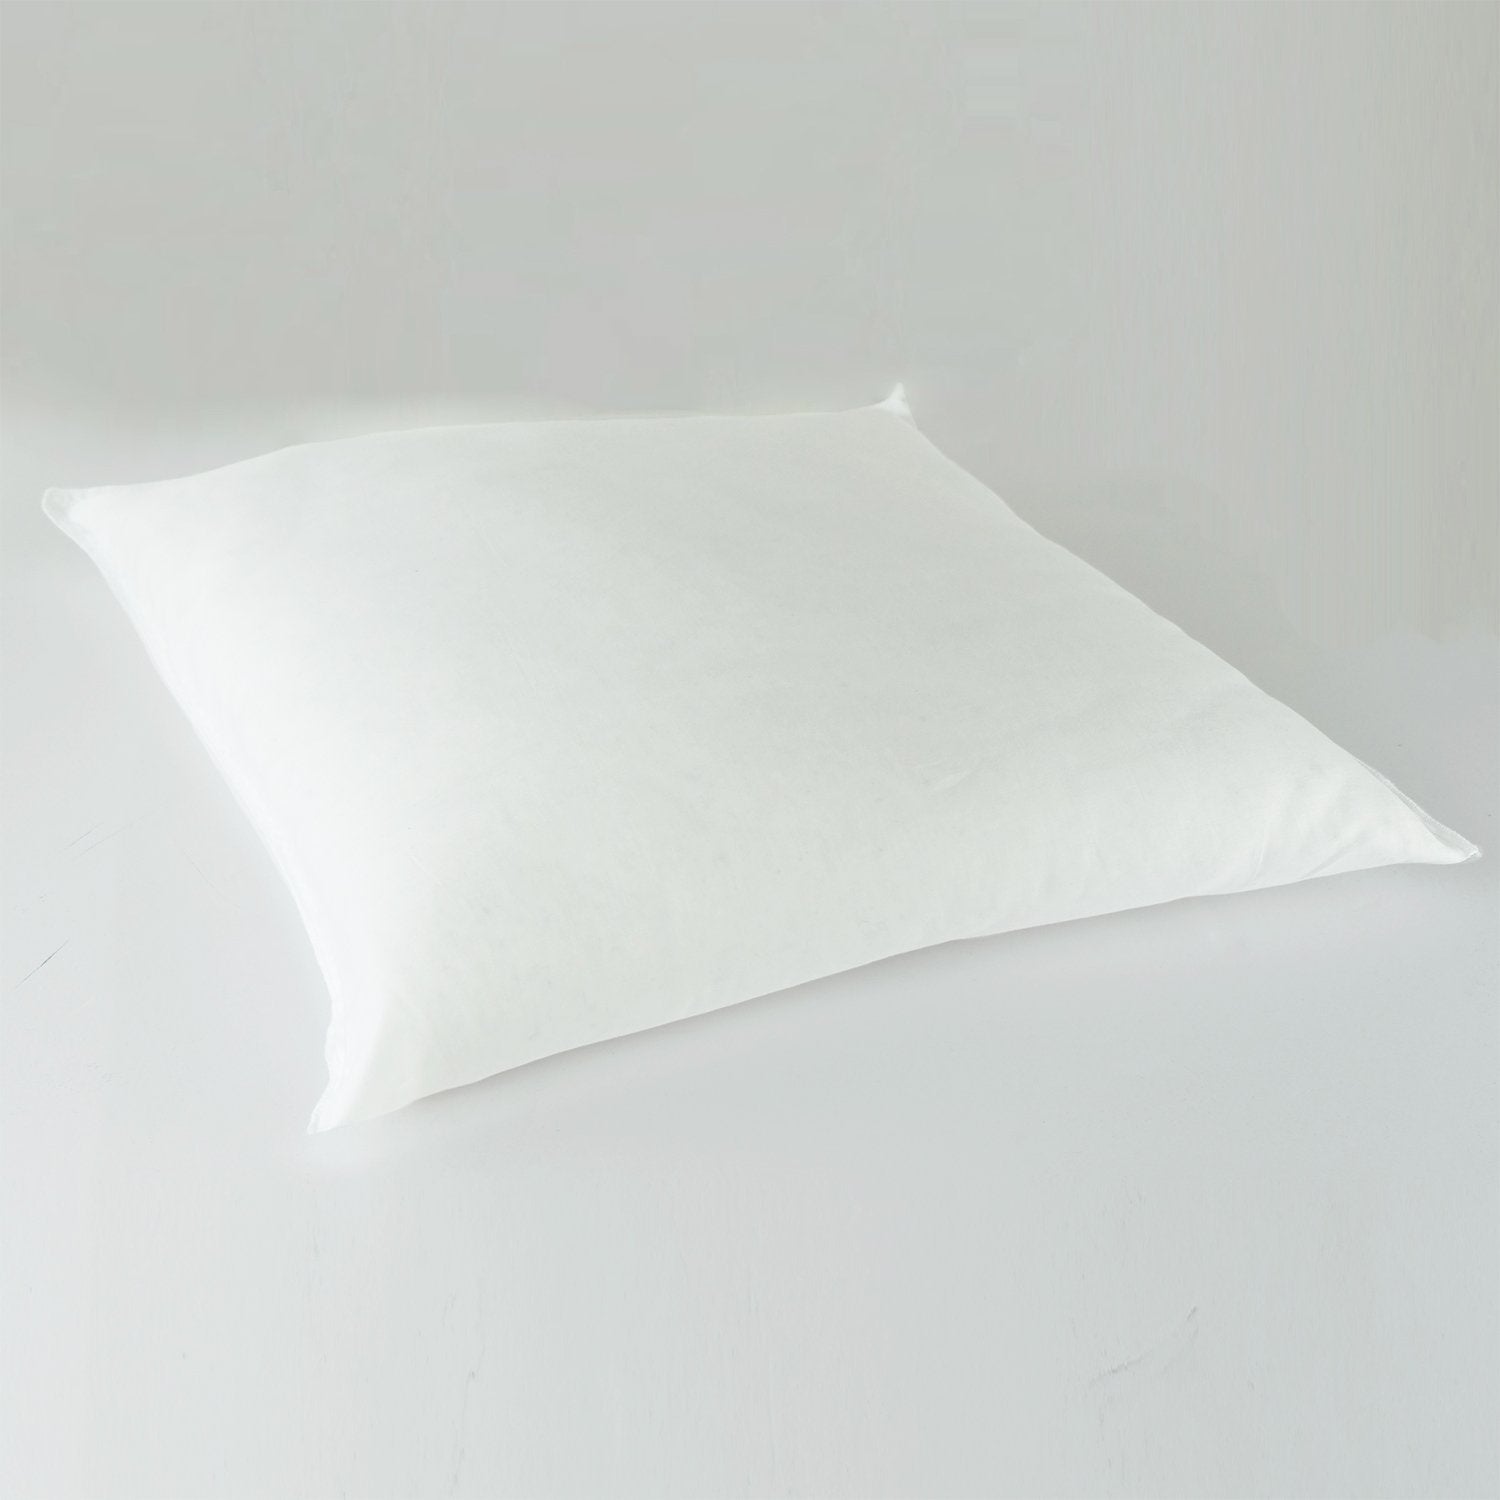 J-Life Marugata Navy Zabuton Floor Pillow_Pillows & Shams_Zabuton Floor Pillows_100% Cotton_Reversible